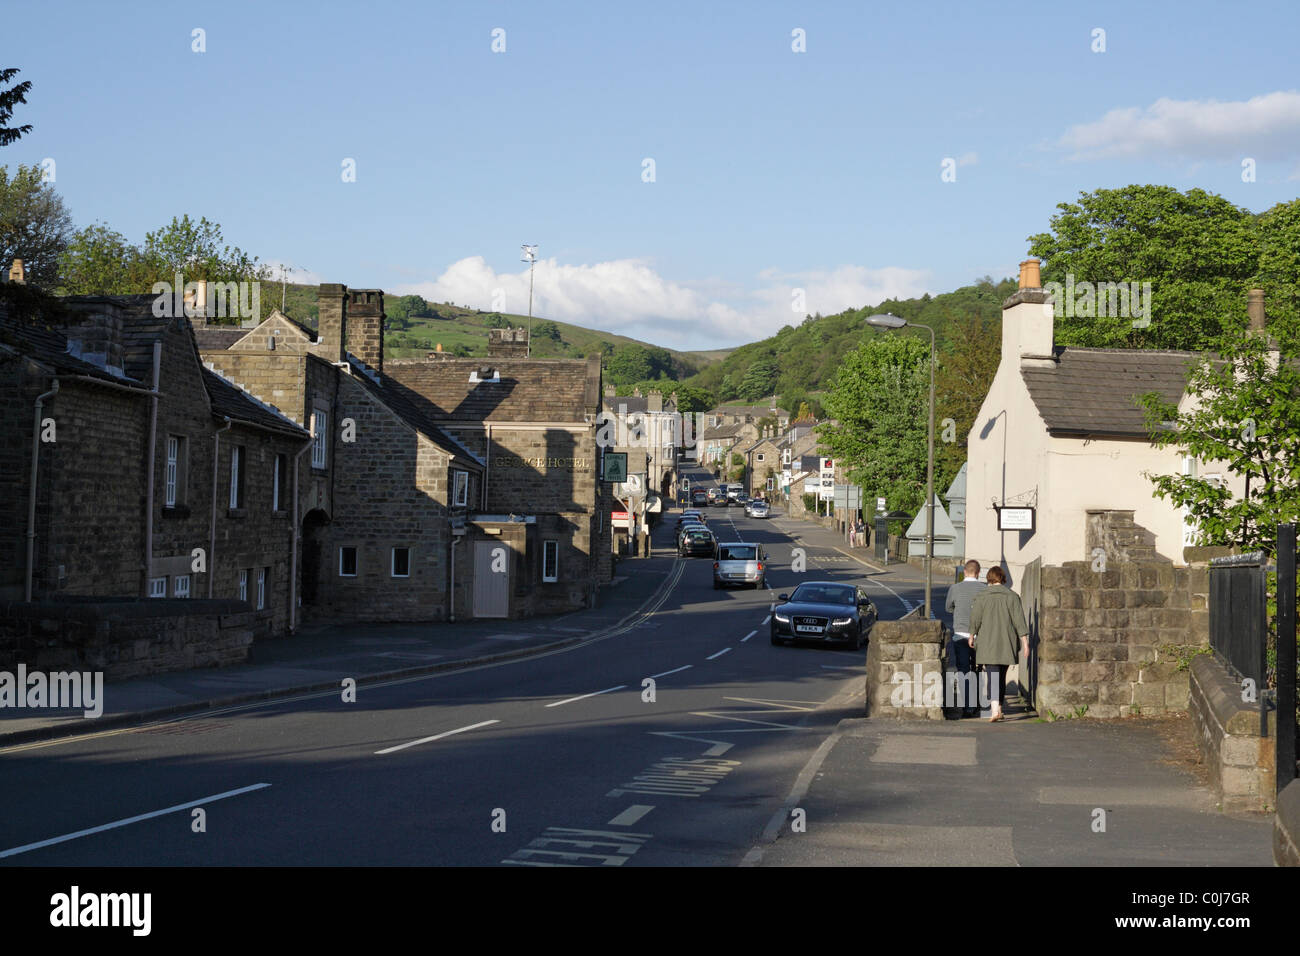 The main Road through Hathersage village in Derbyshire England. Peak district national park Stock Photo